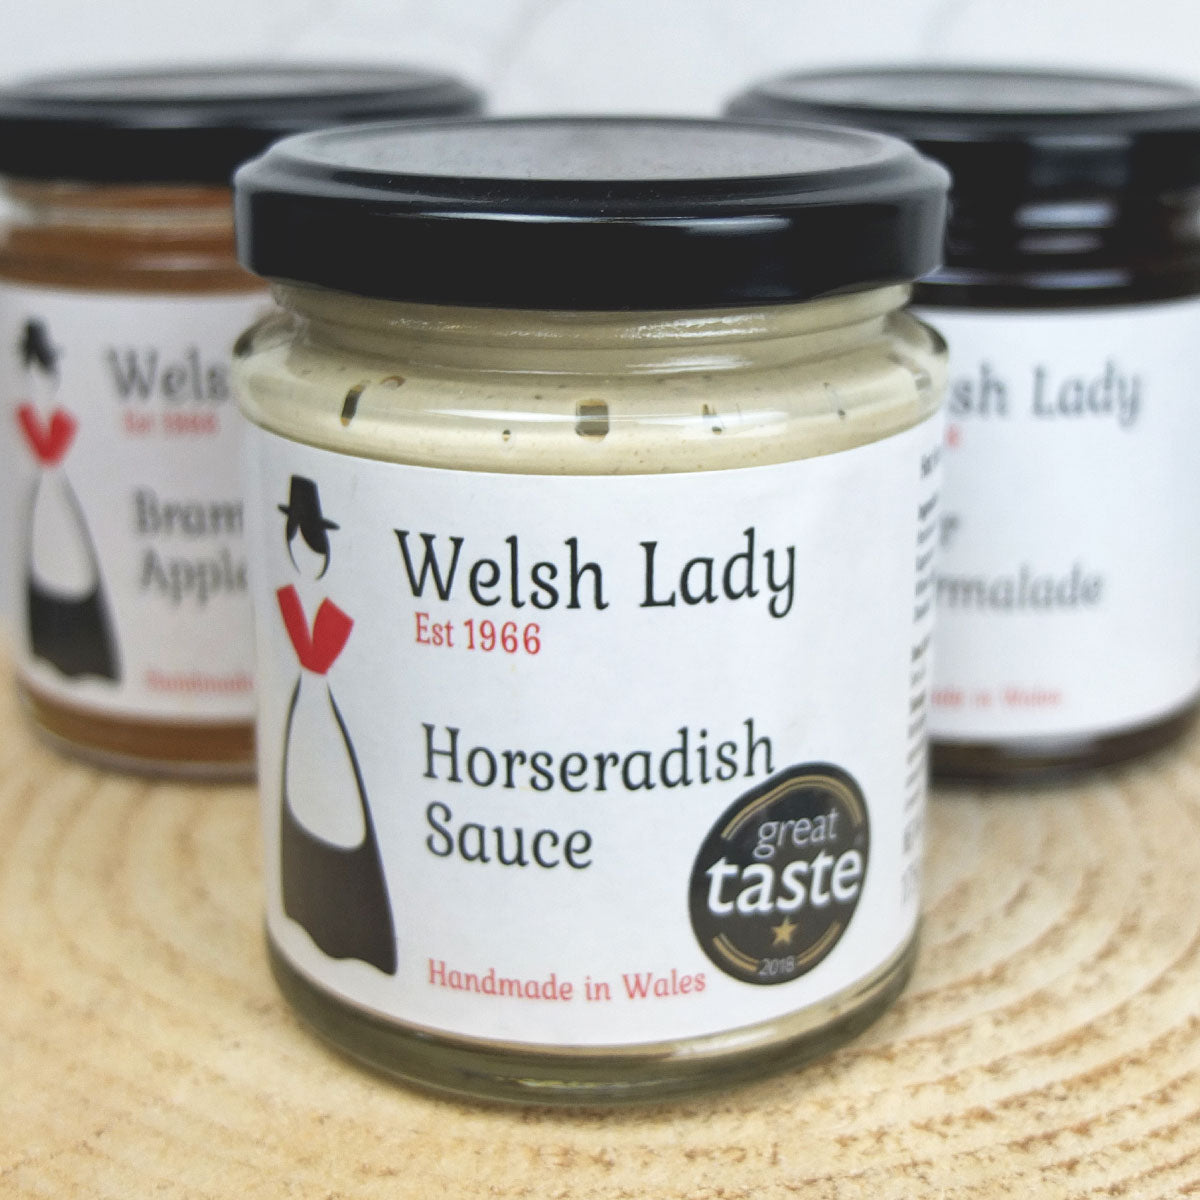 Horseradish Sauce by Welsh Lady Preserves